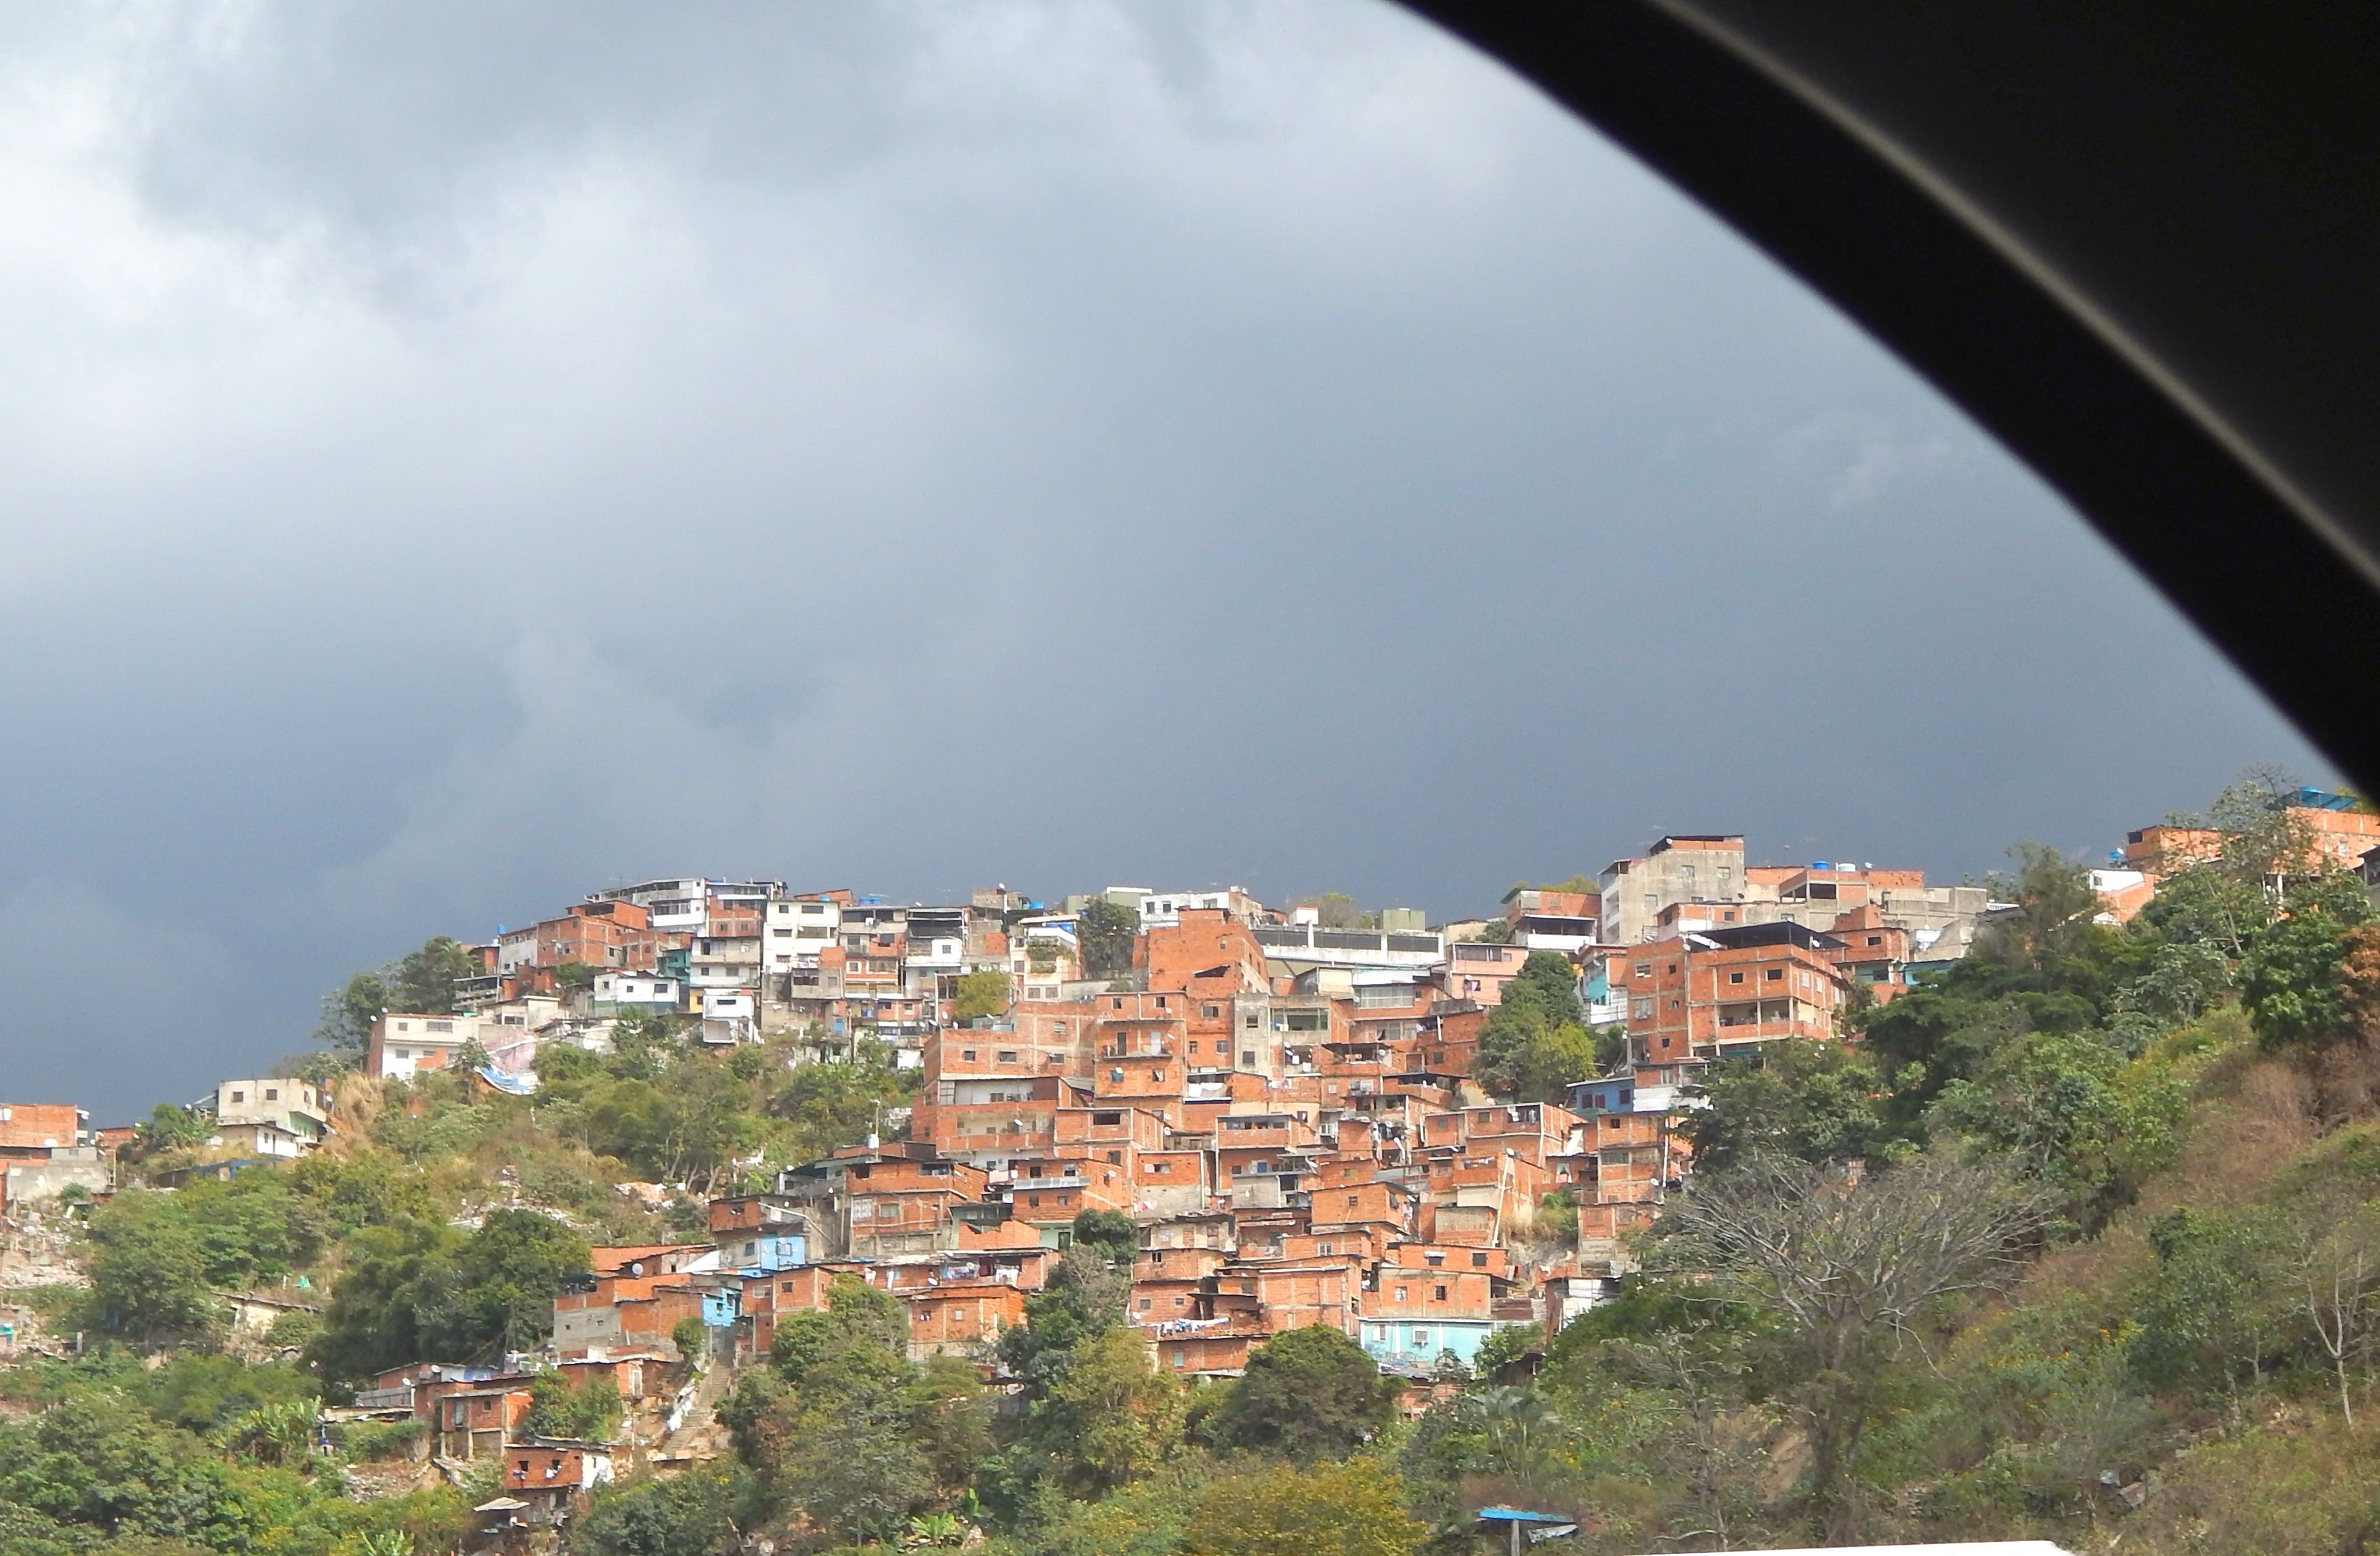 Caracas - banlieue